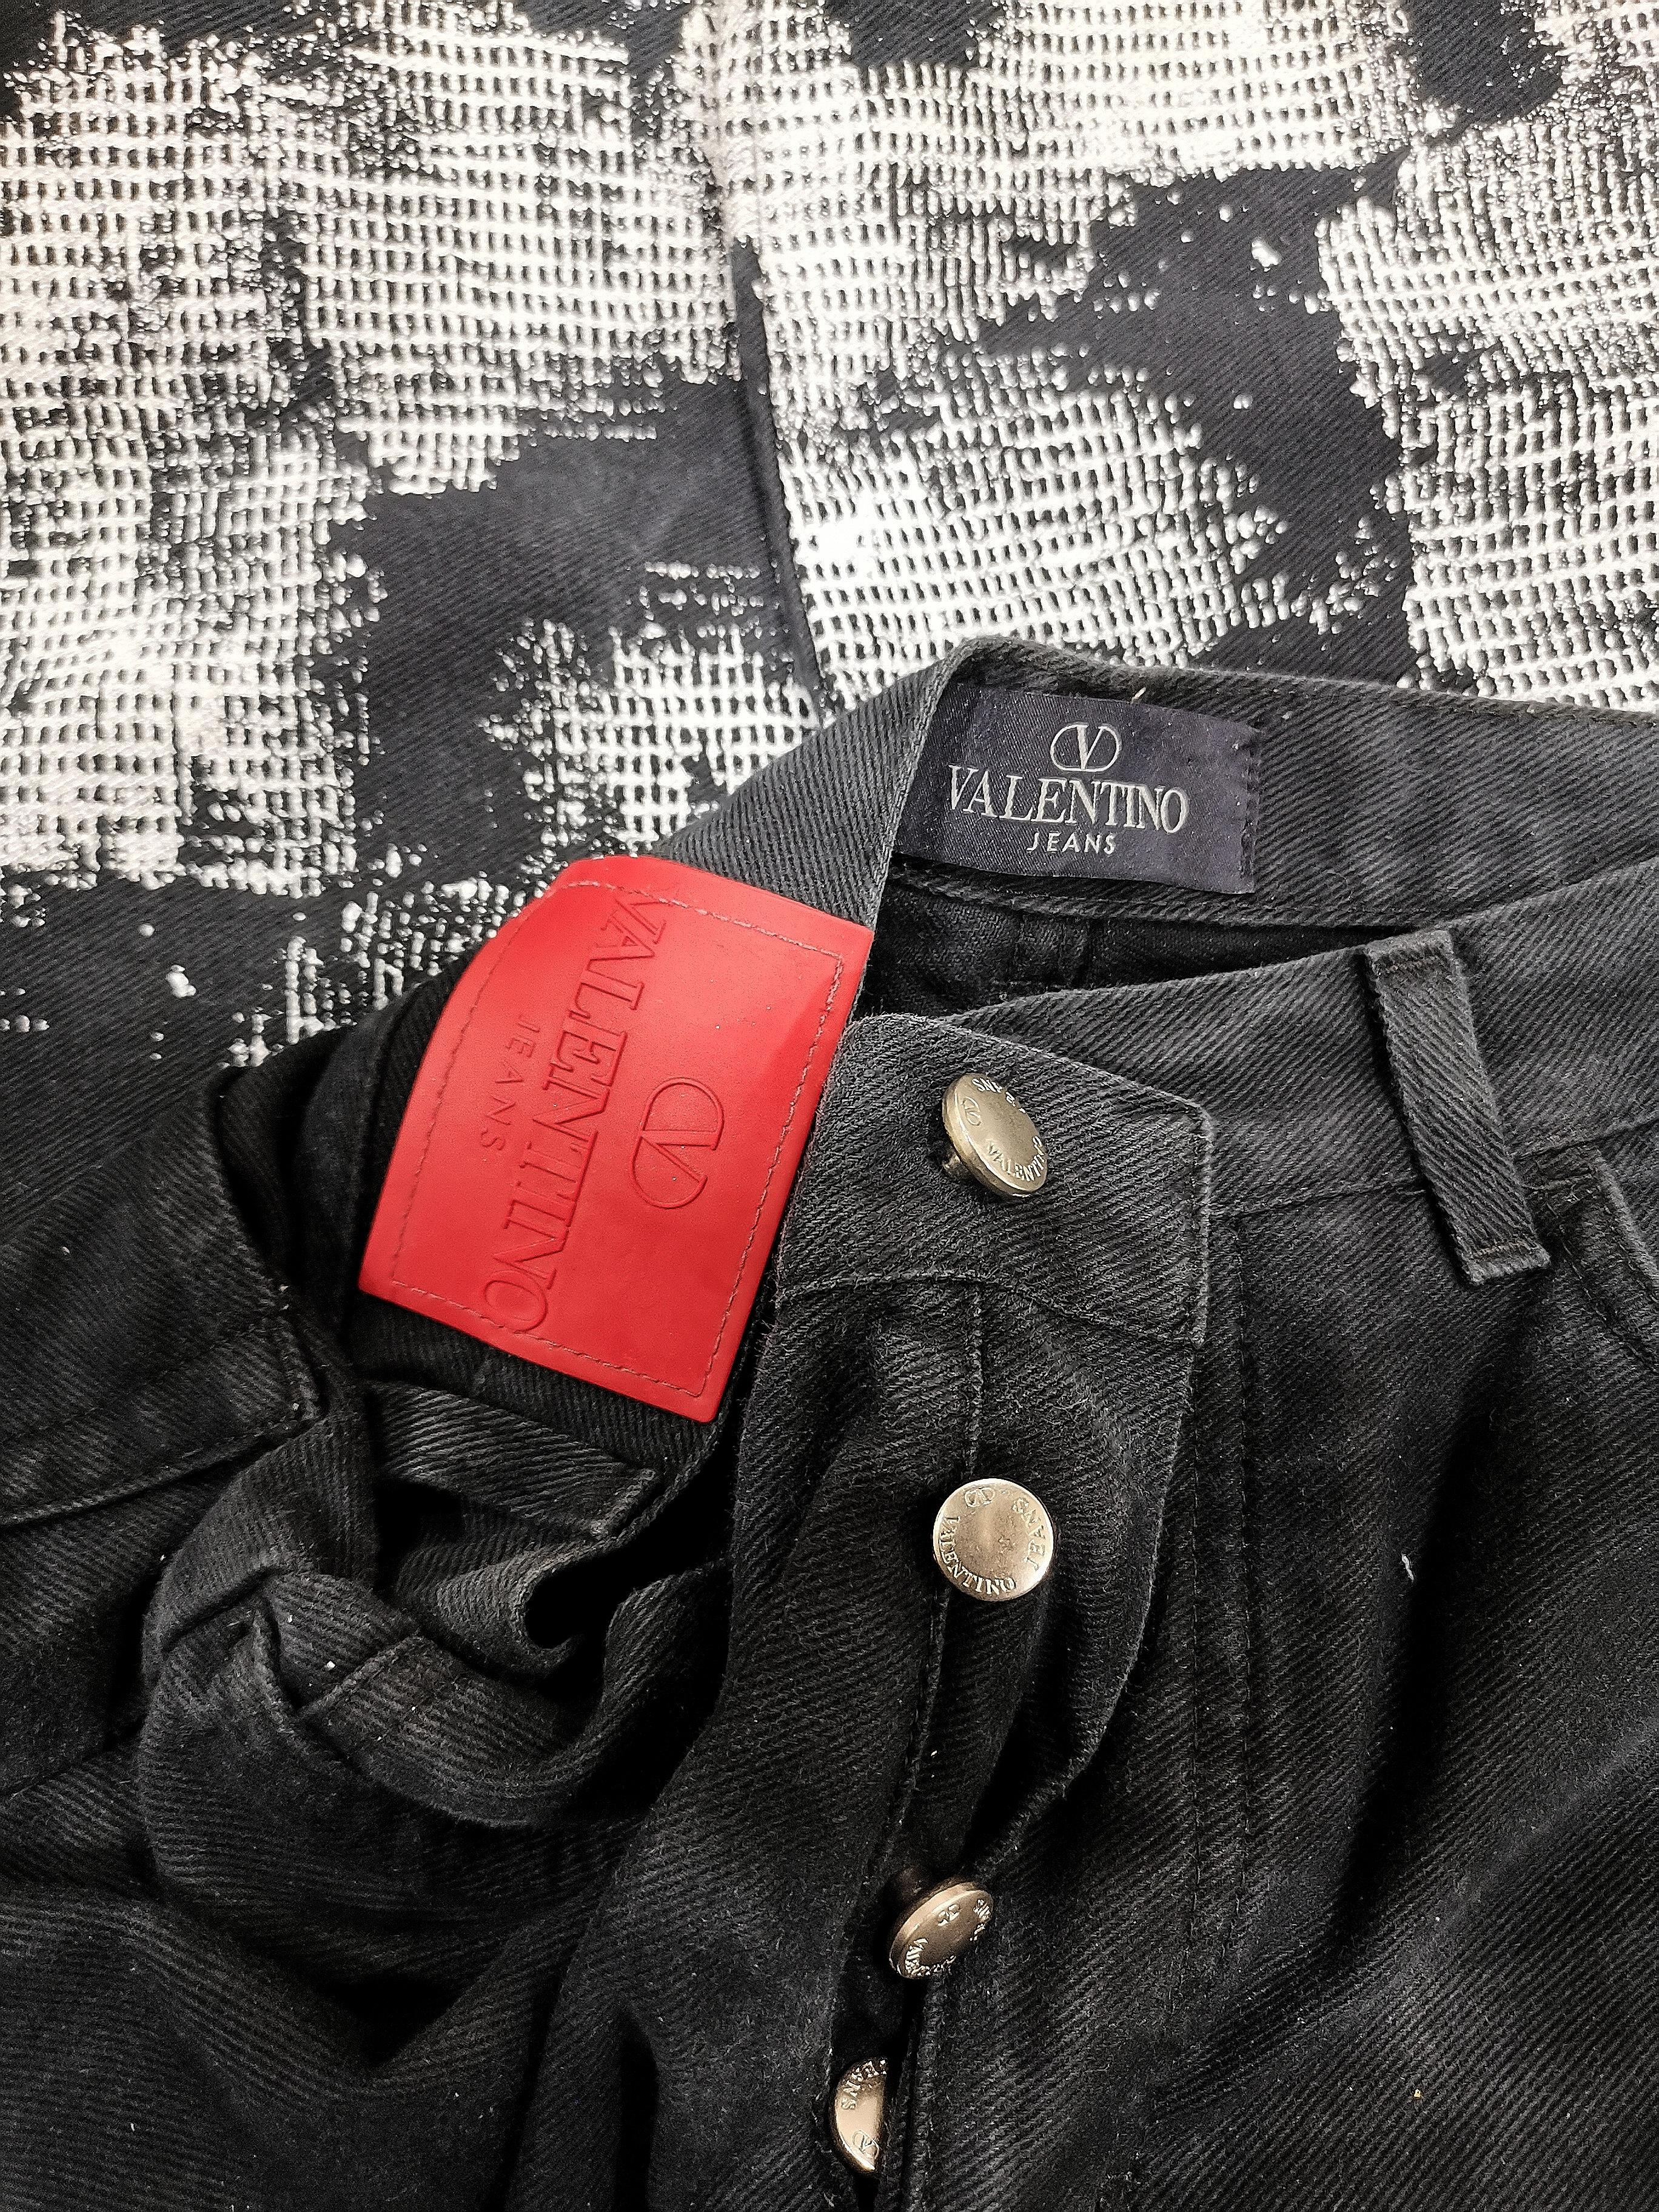 valentino beaded jeans